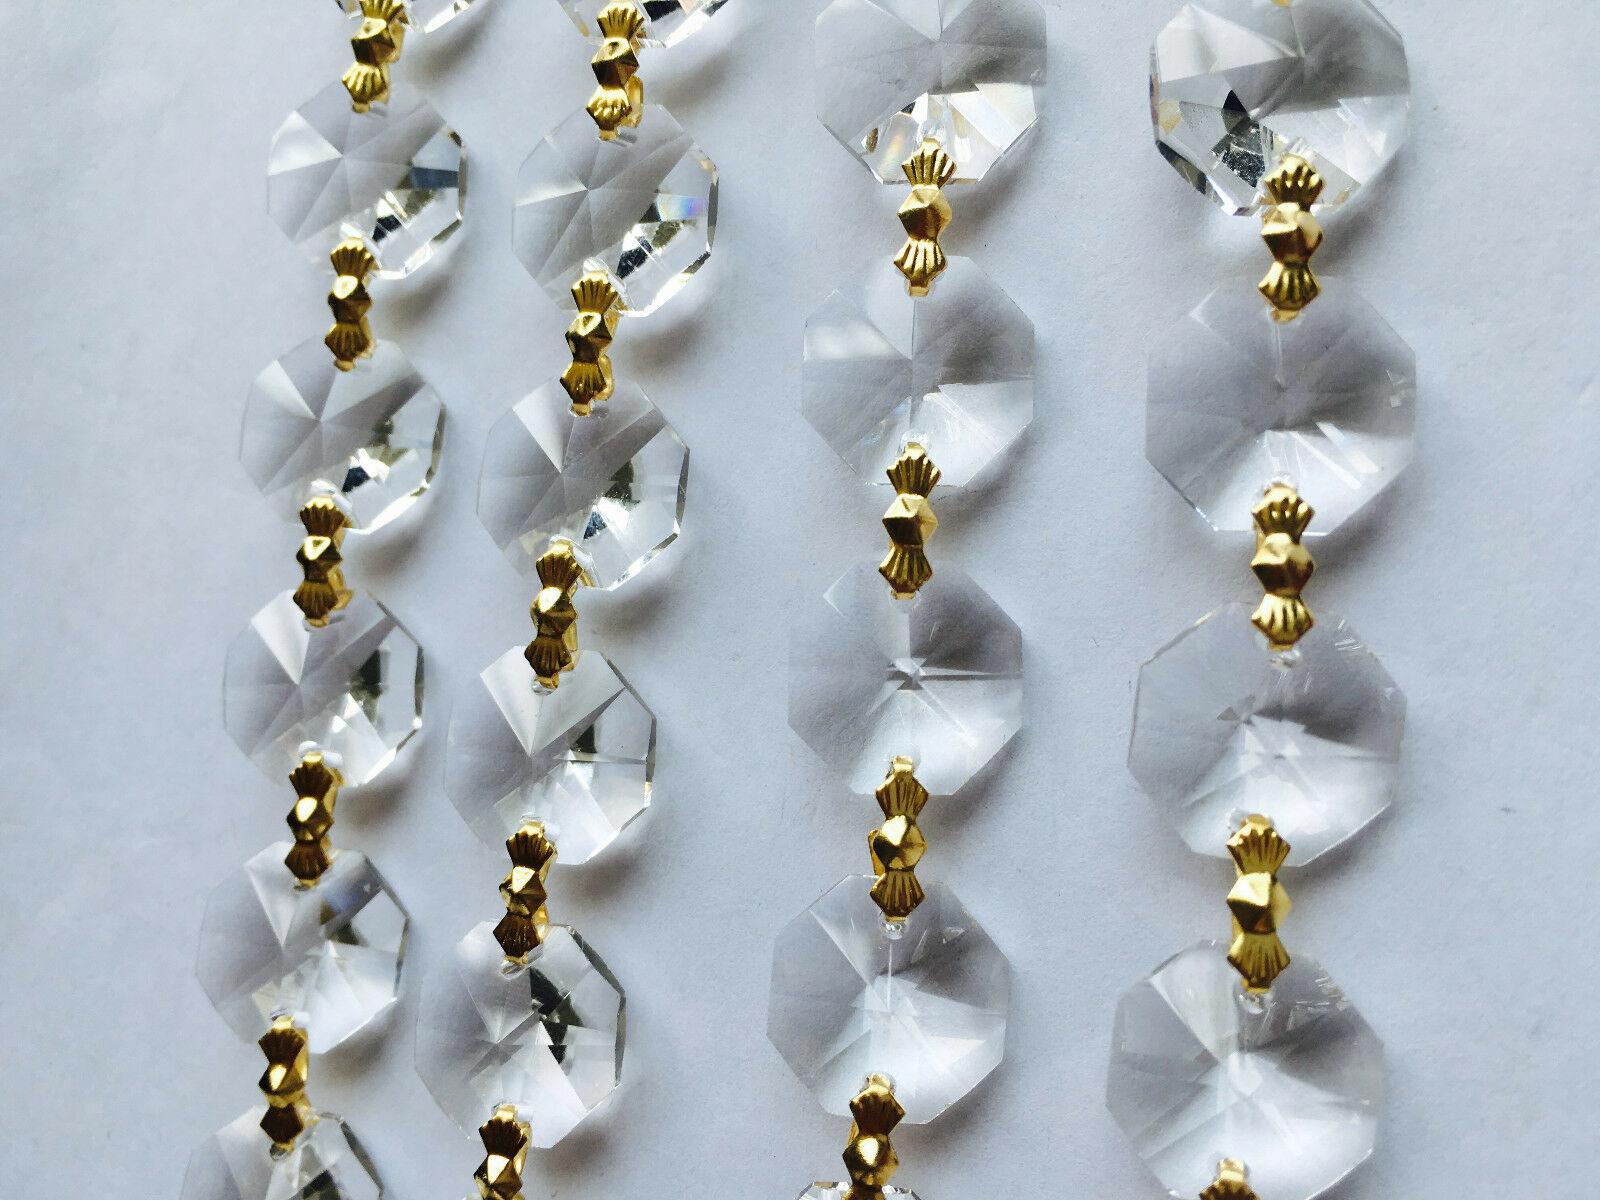 100X Acrylic Crystal Clear Garland Hanging Bead Curtain Wedding Club Party Decor 